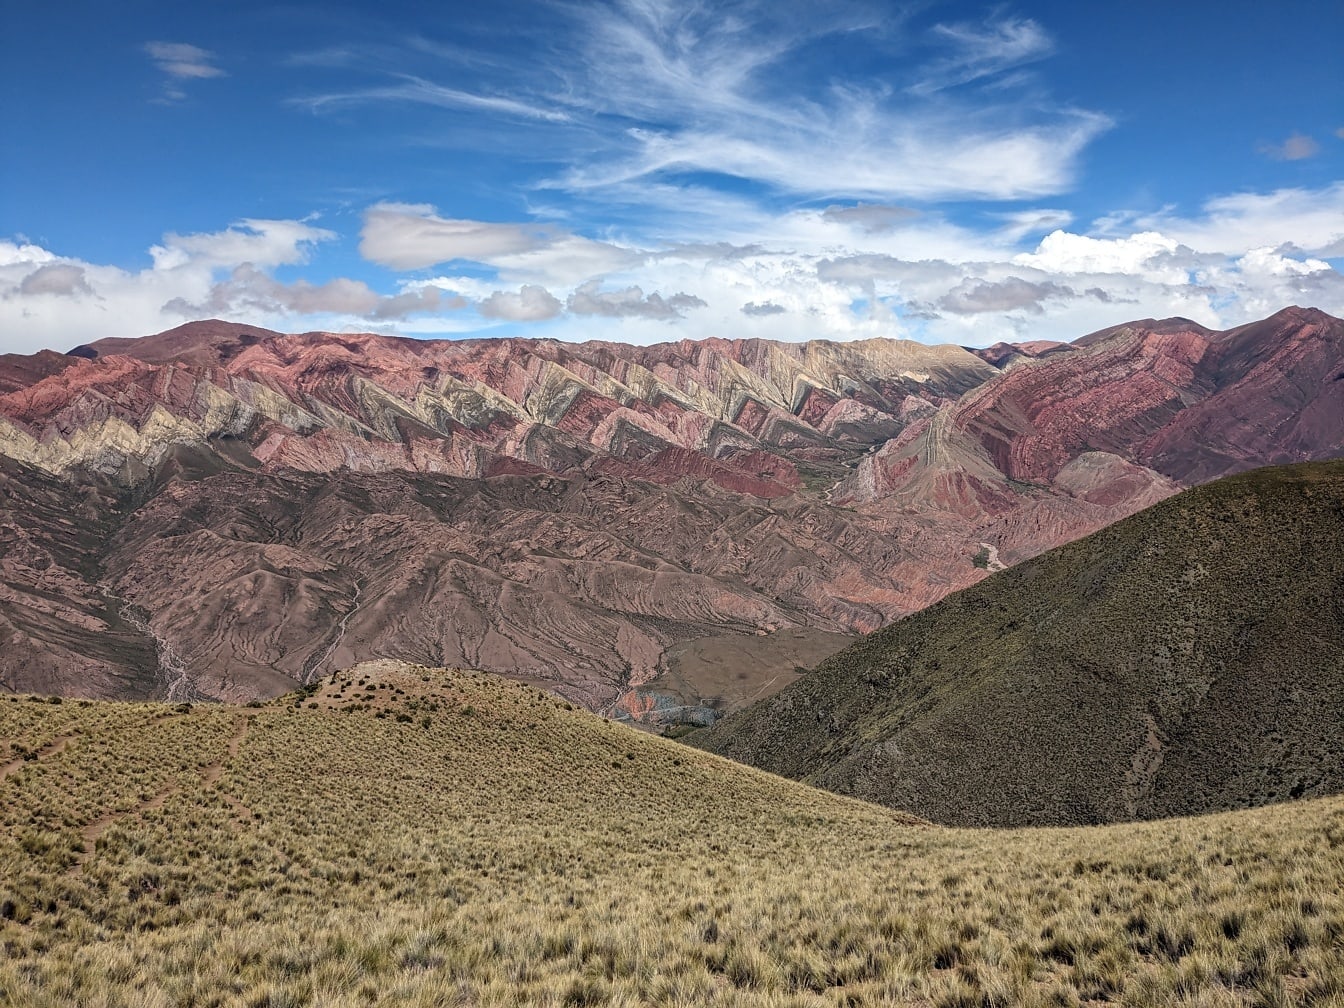 Dallandskab i Serranía de Hornocal-bjergene i Argentinas naturreservat